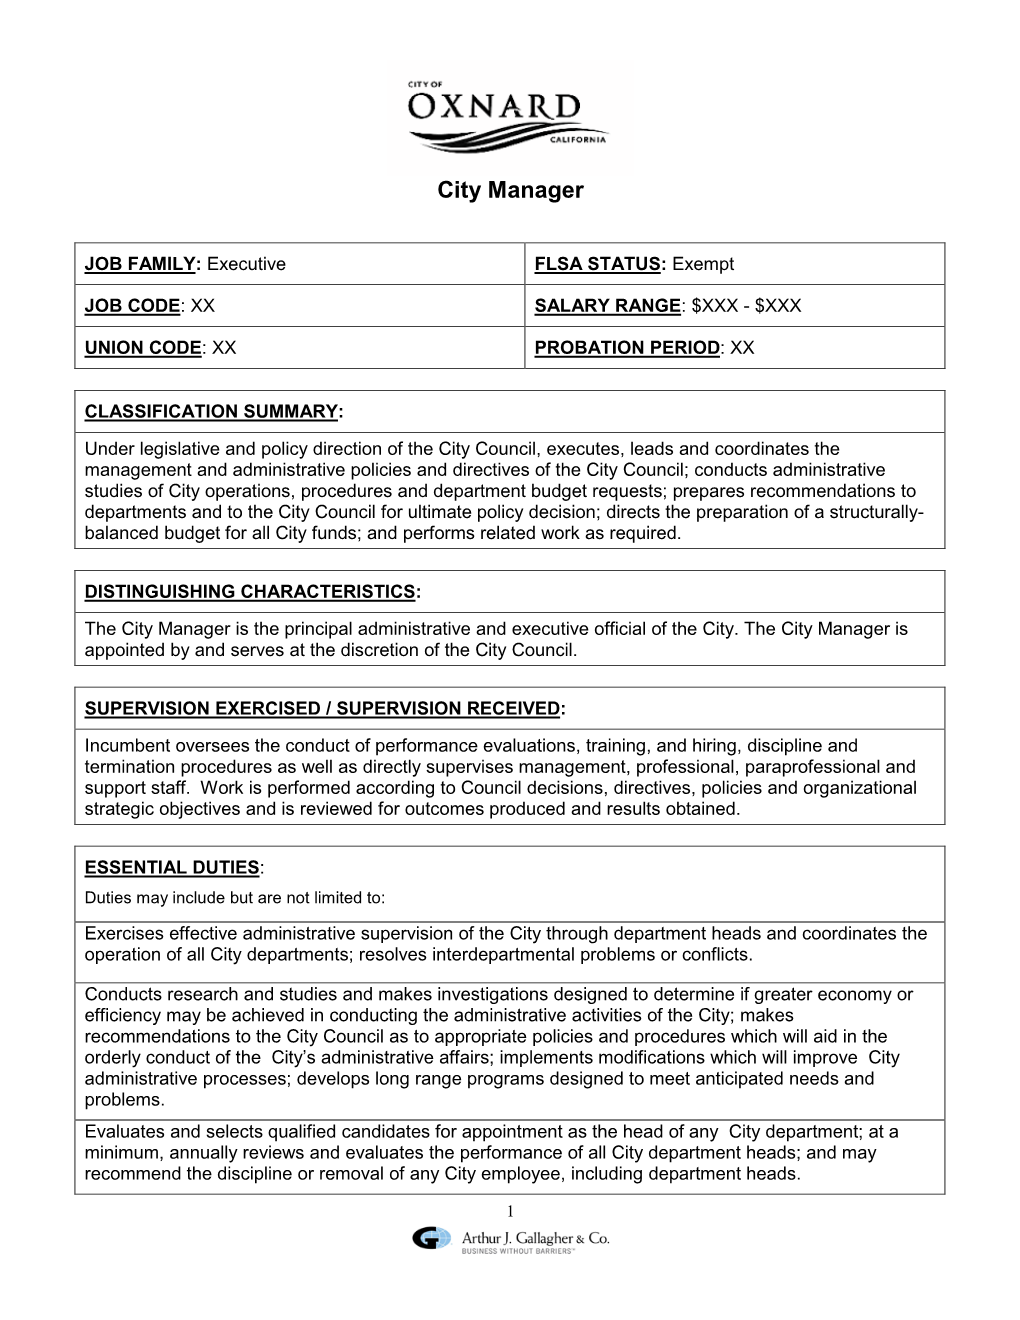 City Manager Job Description